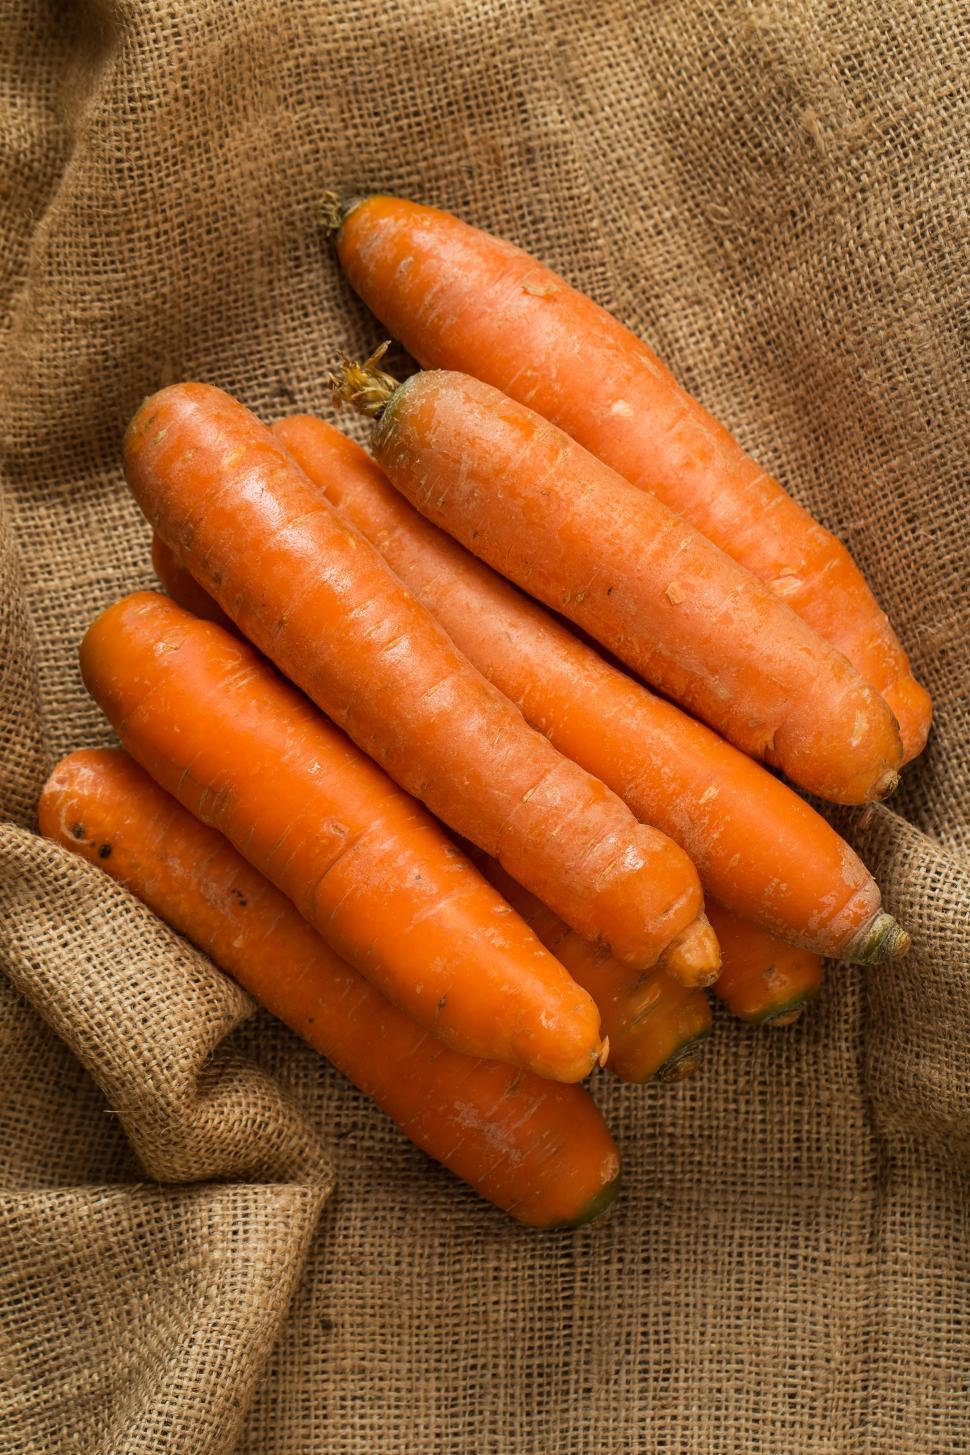 Free Image of Carrots on burlap fabric blanket 